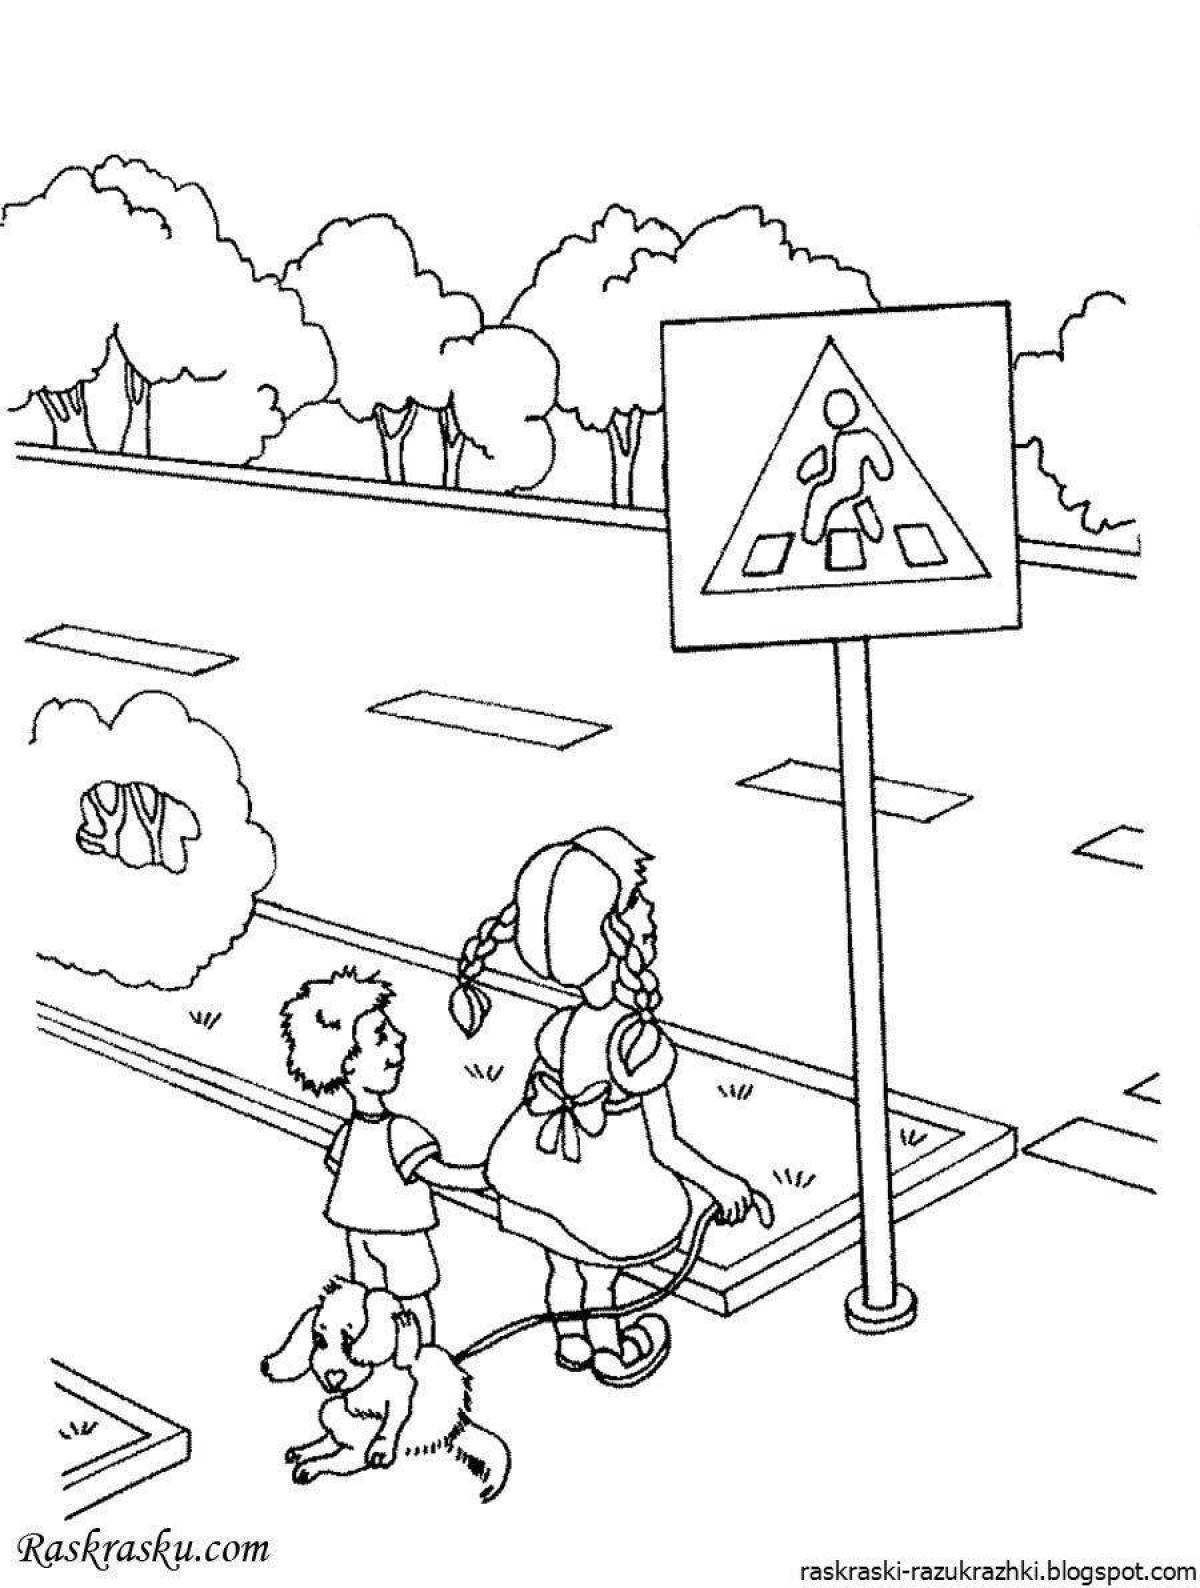 Traffic code for schoolchildren #7